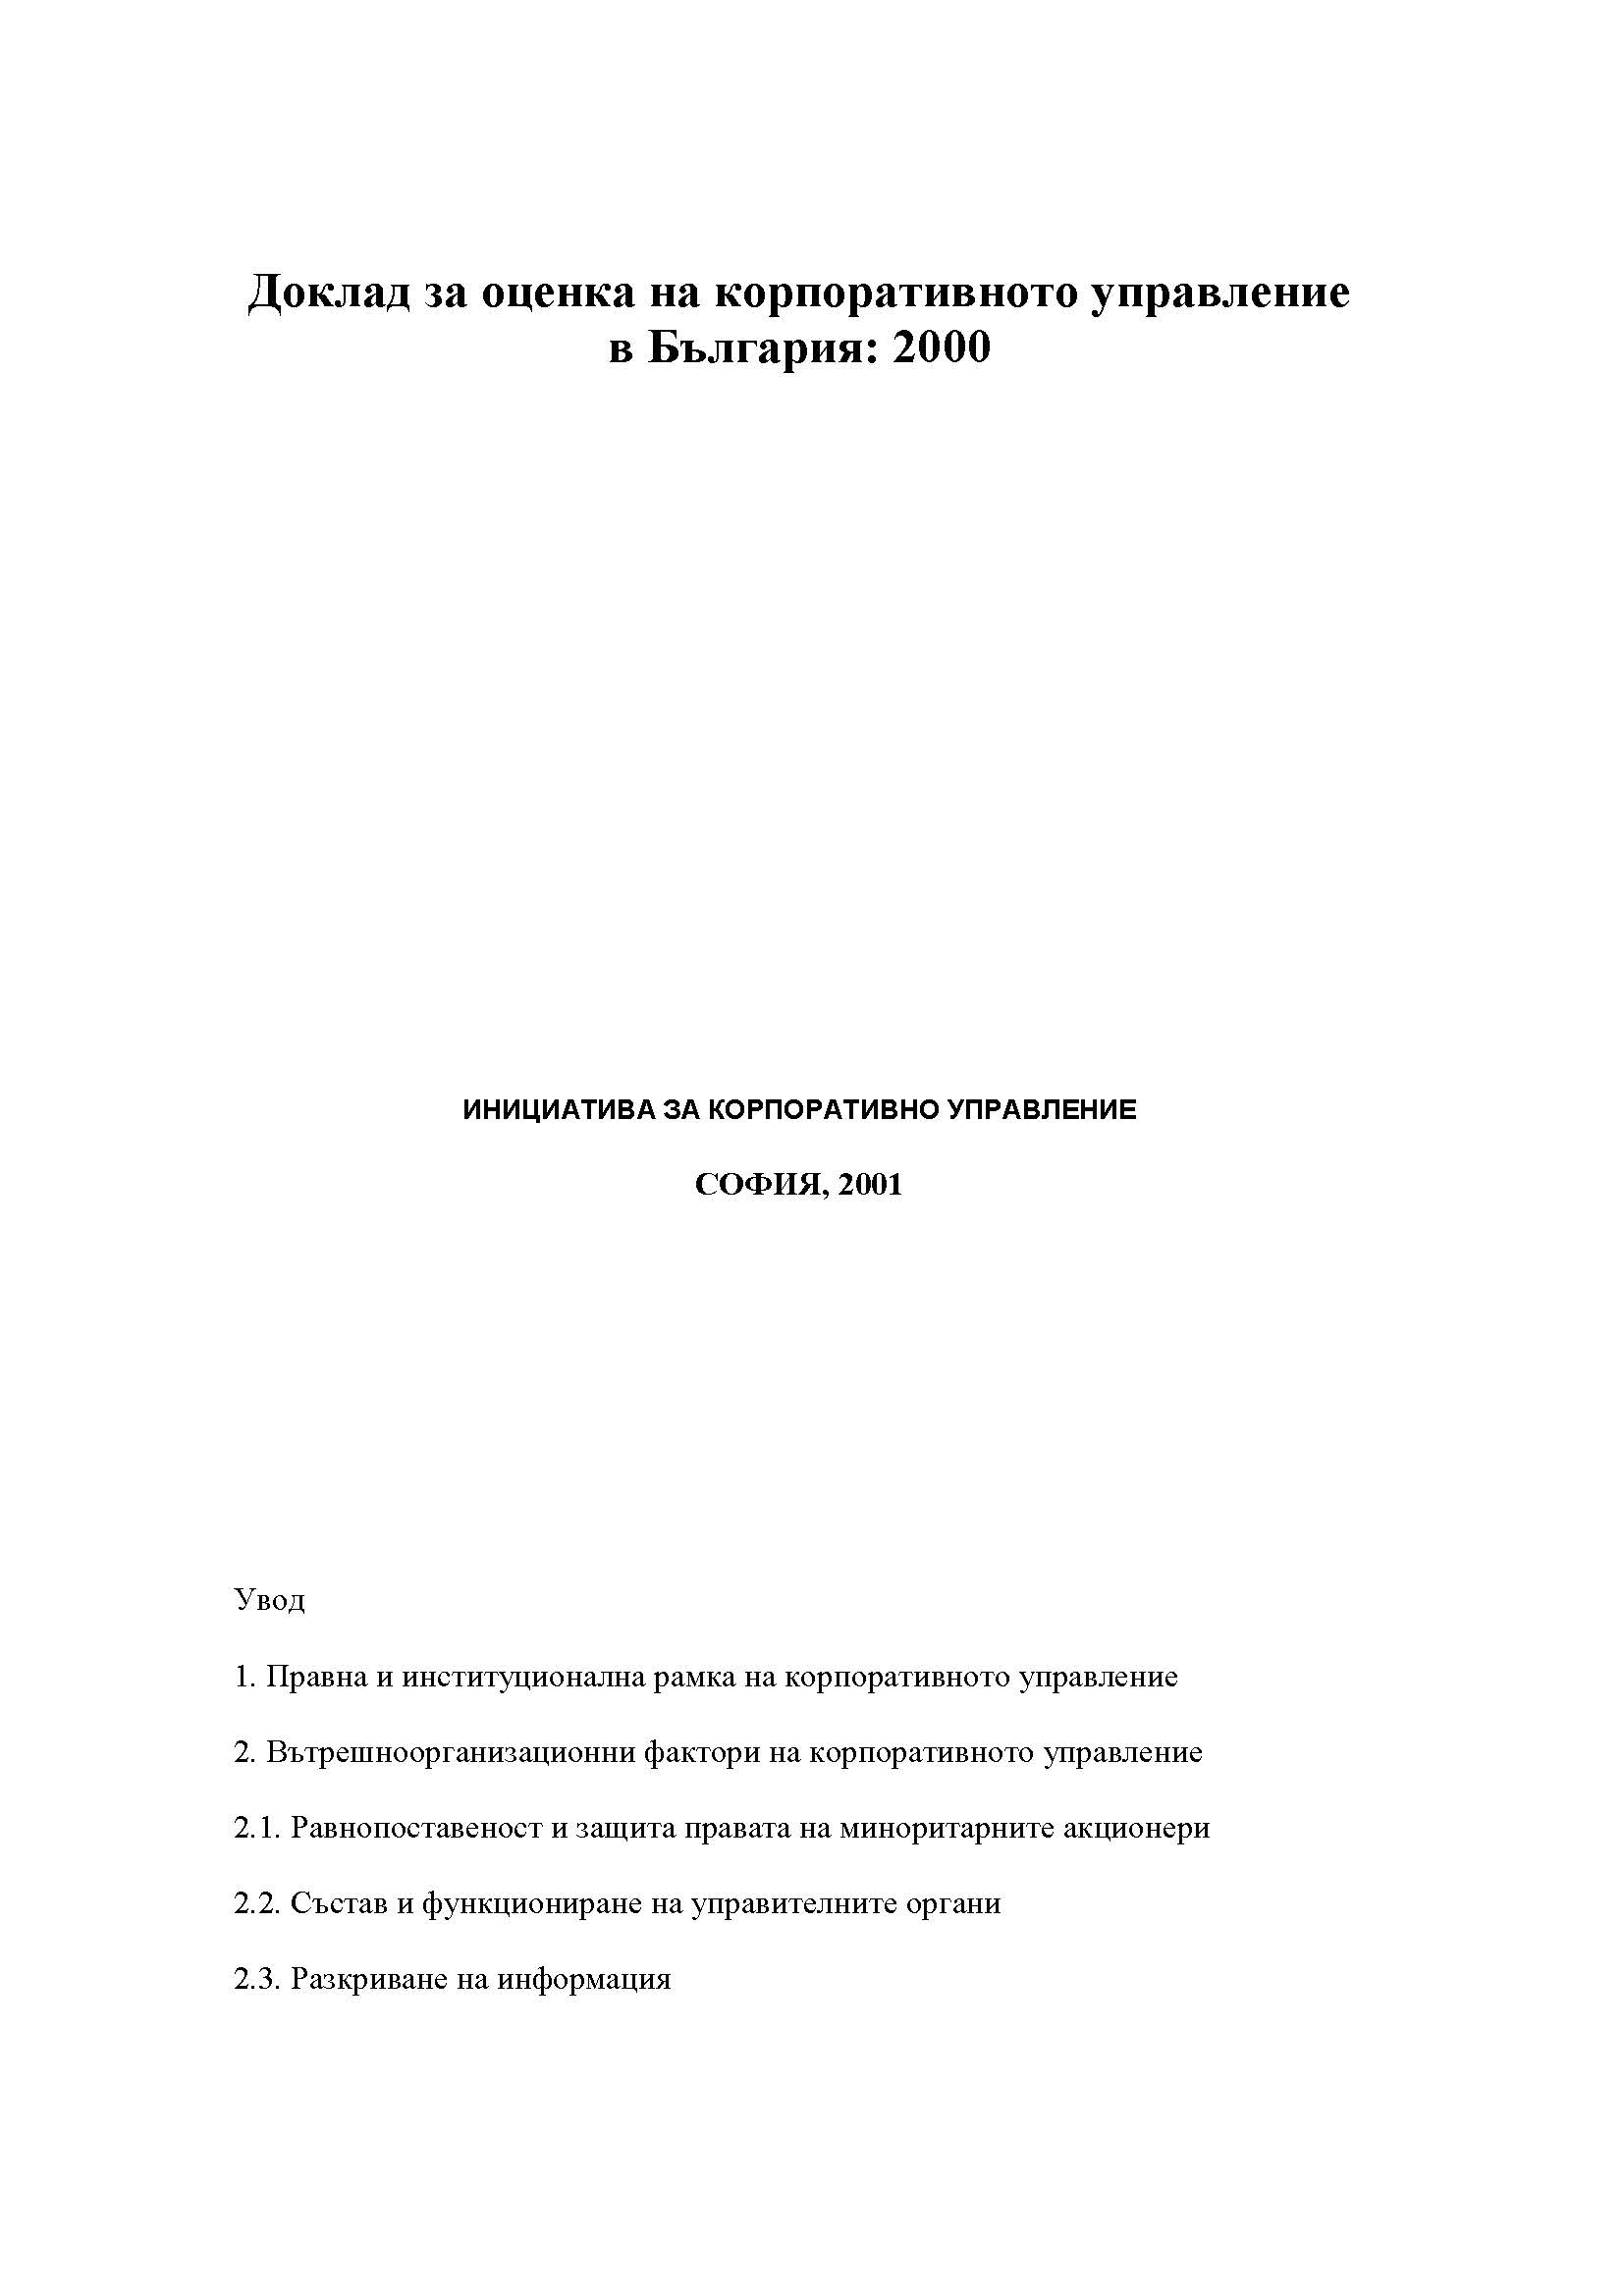 Corporate Governance Assessment Report: 2000